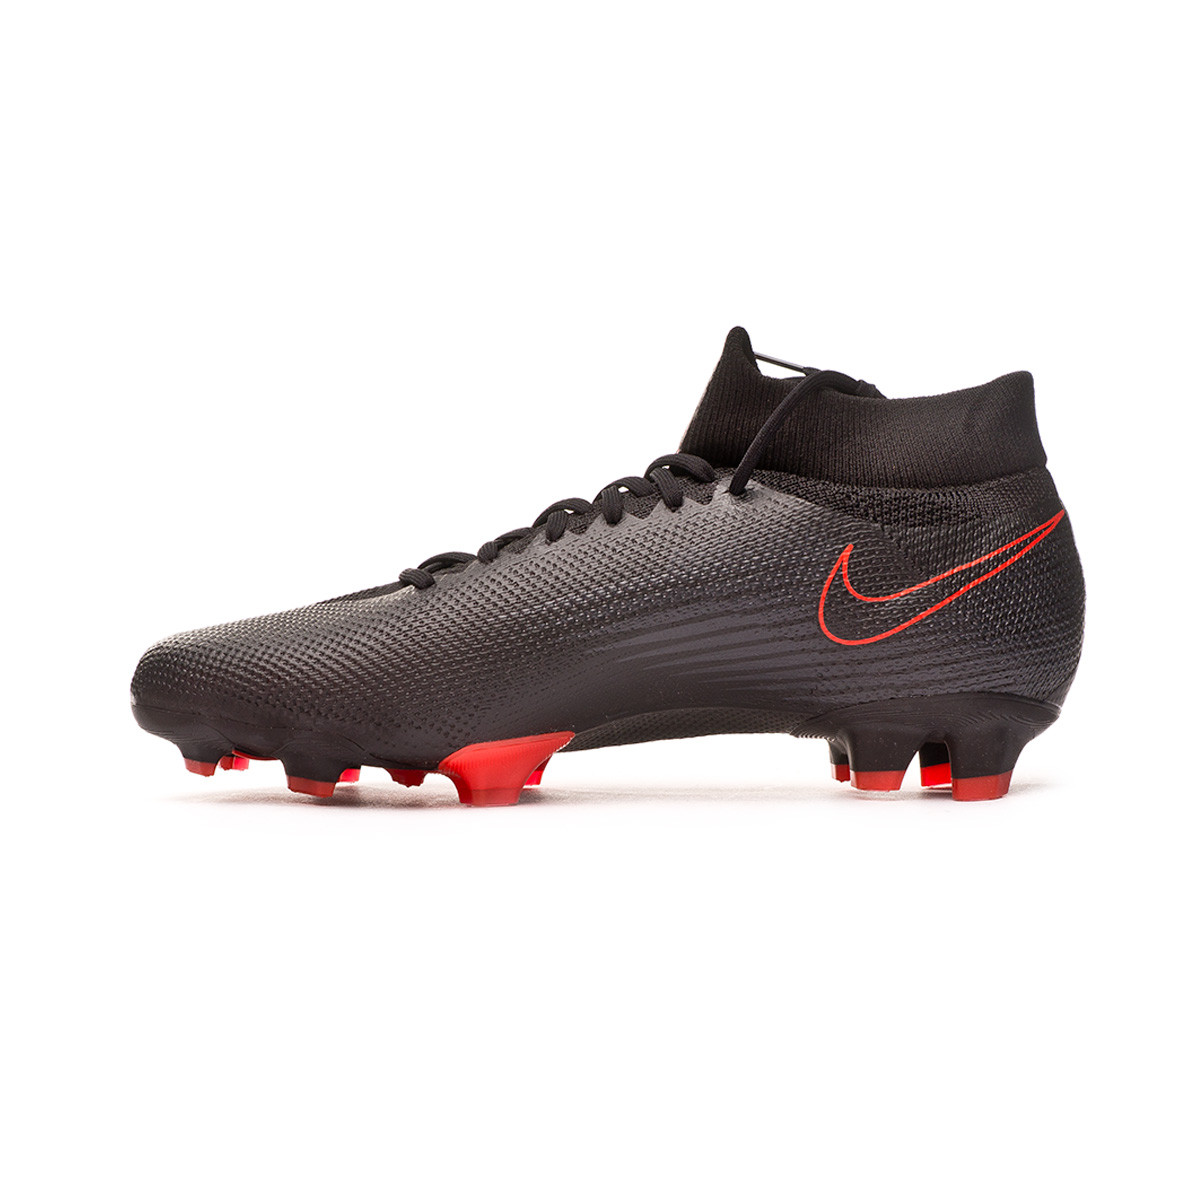 Bota de fútbol Nike Mercurial Superfly VII Pro FG Black-Dark smoke grey- Chile red - Tienda de fútbol Fútbol Emotion